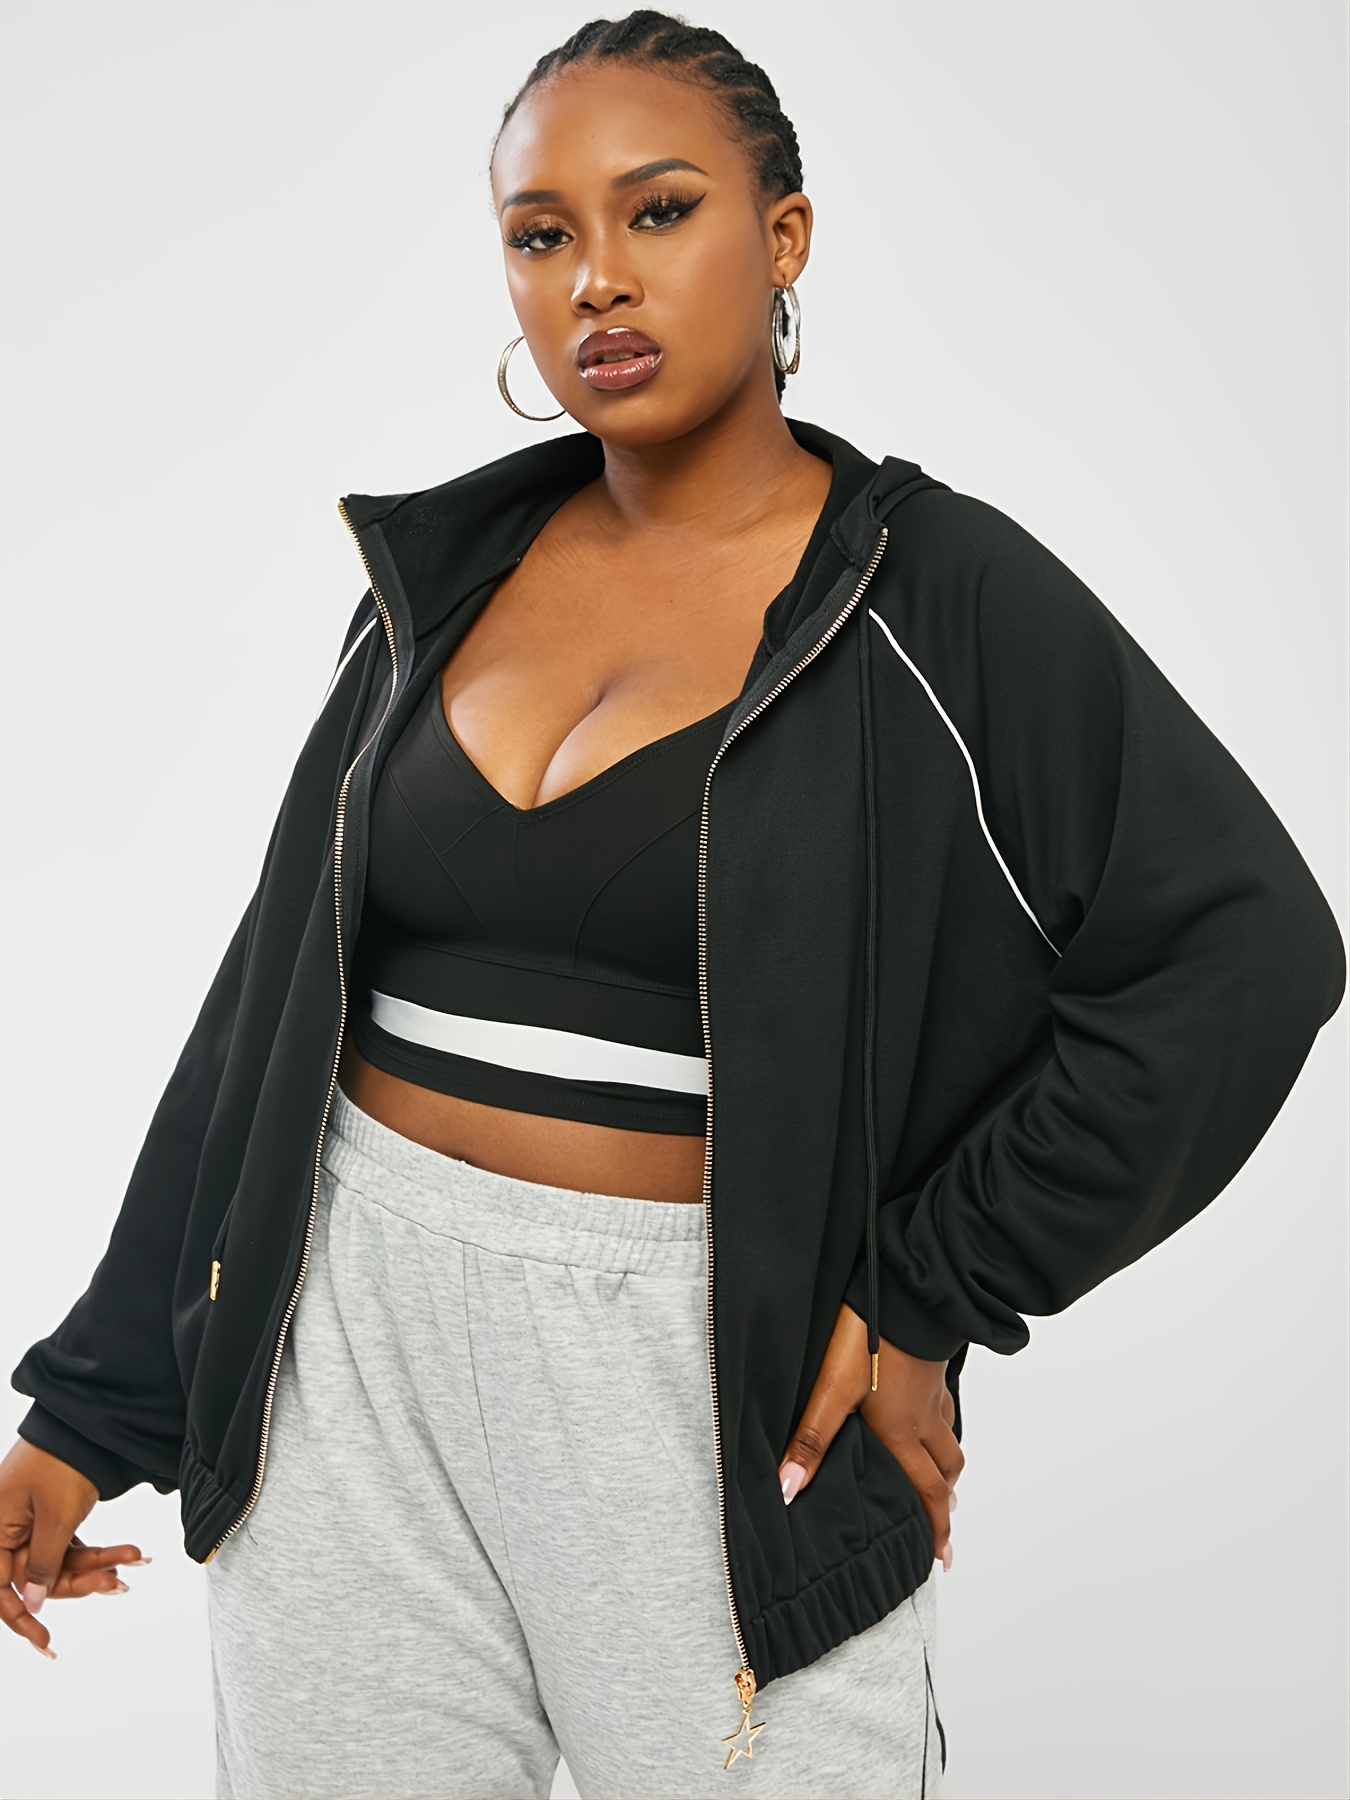 Women's Zipper Hoodies Plus Size Long Sleeve Sweatshirts with